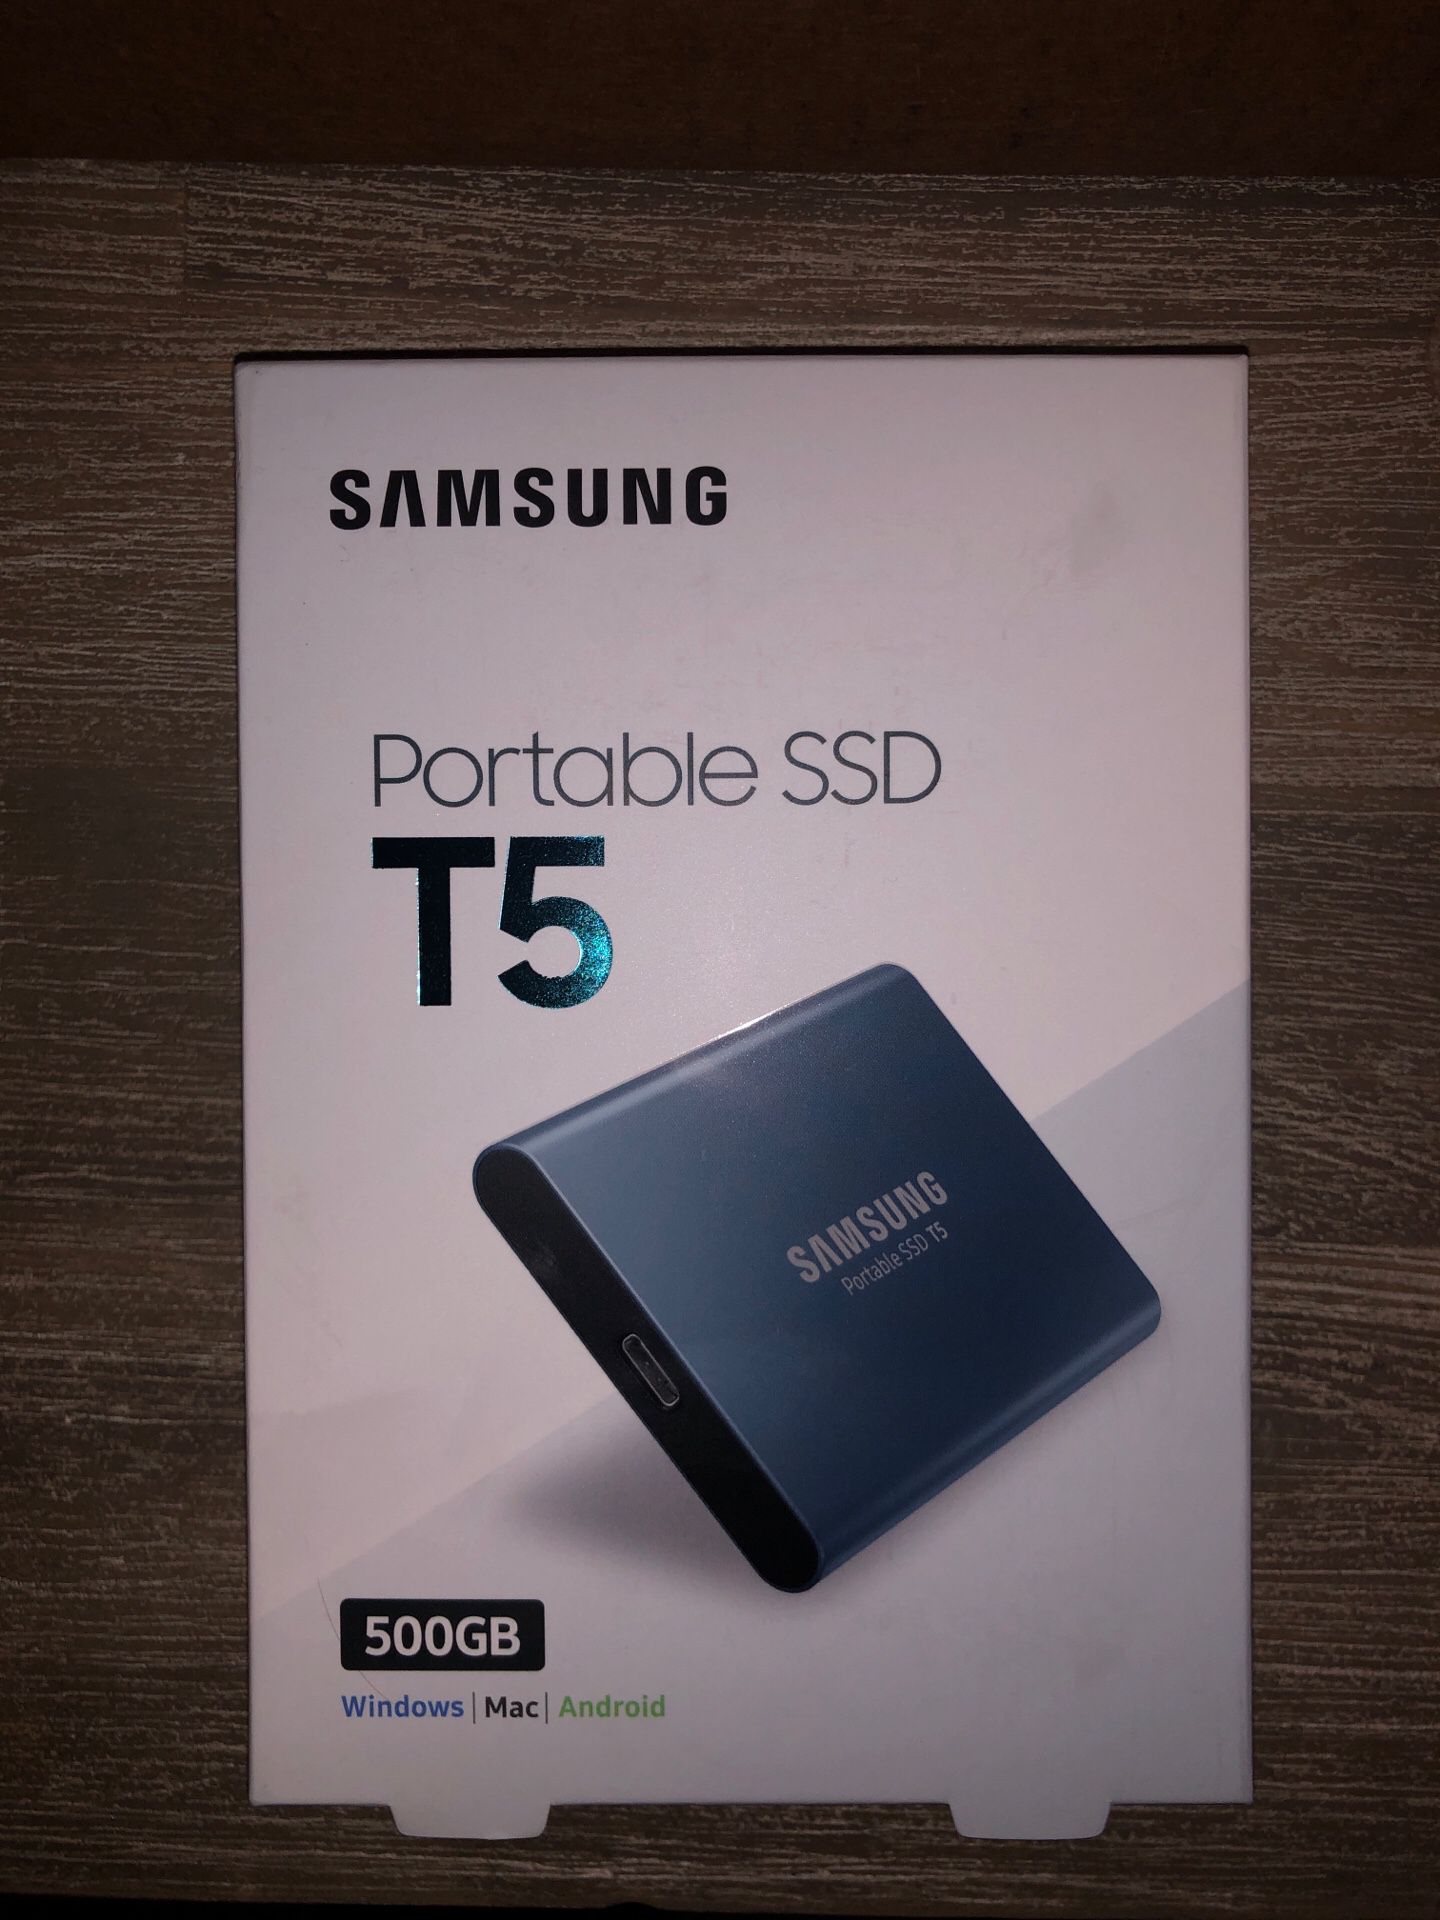 Samsung Portable SSD T5 500GB $75